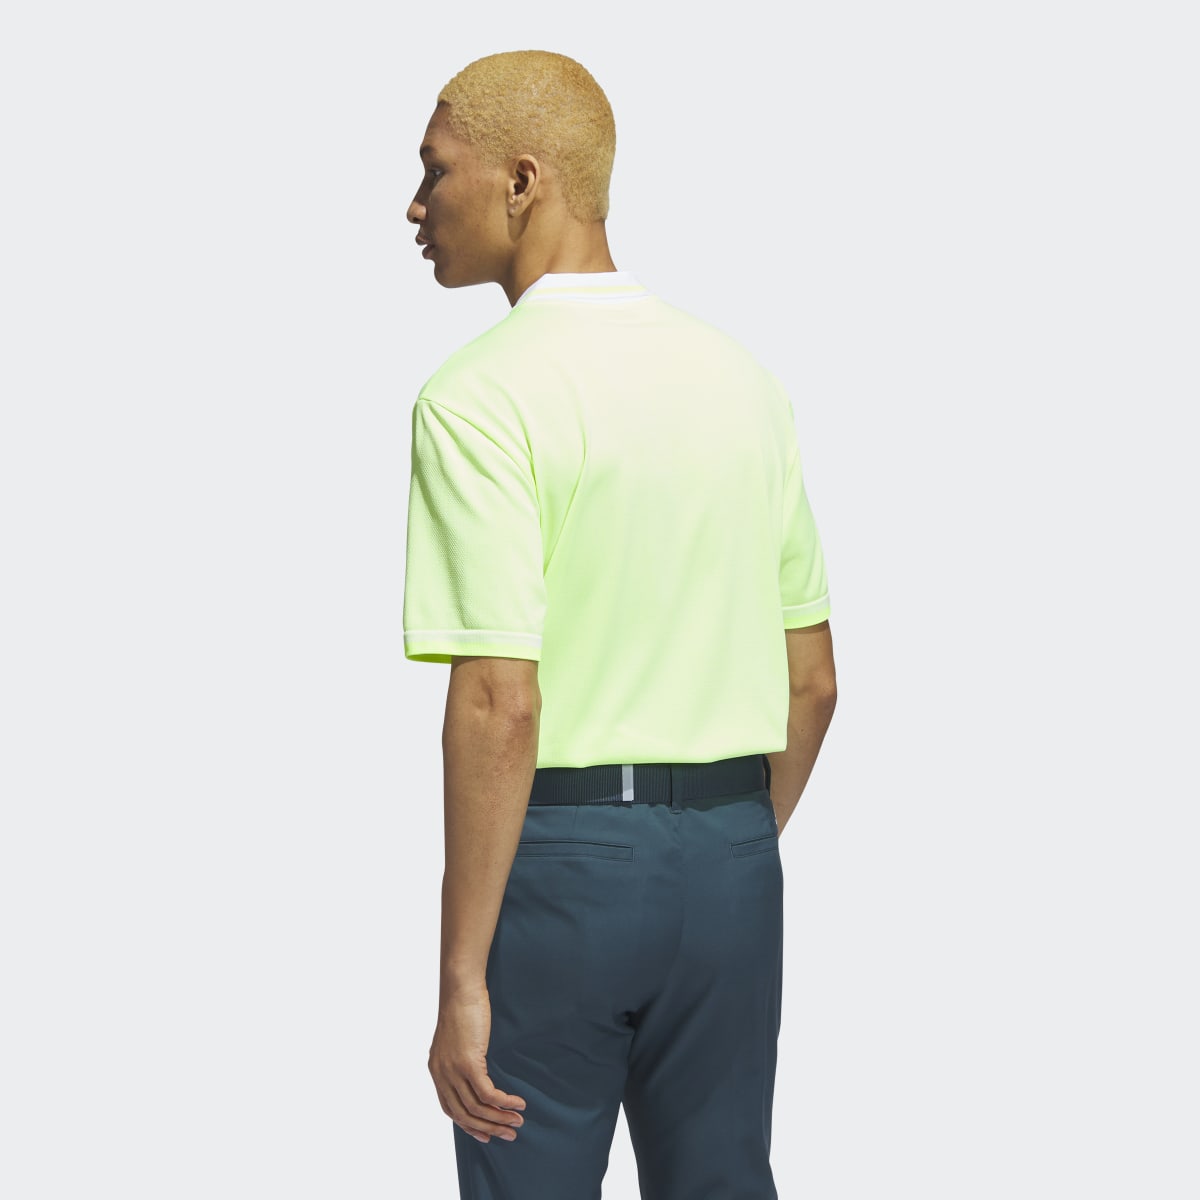 Adidas Ultimate365 Tour PRIMEKNIT Golf Polo Shirt. 5